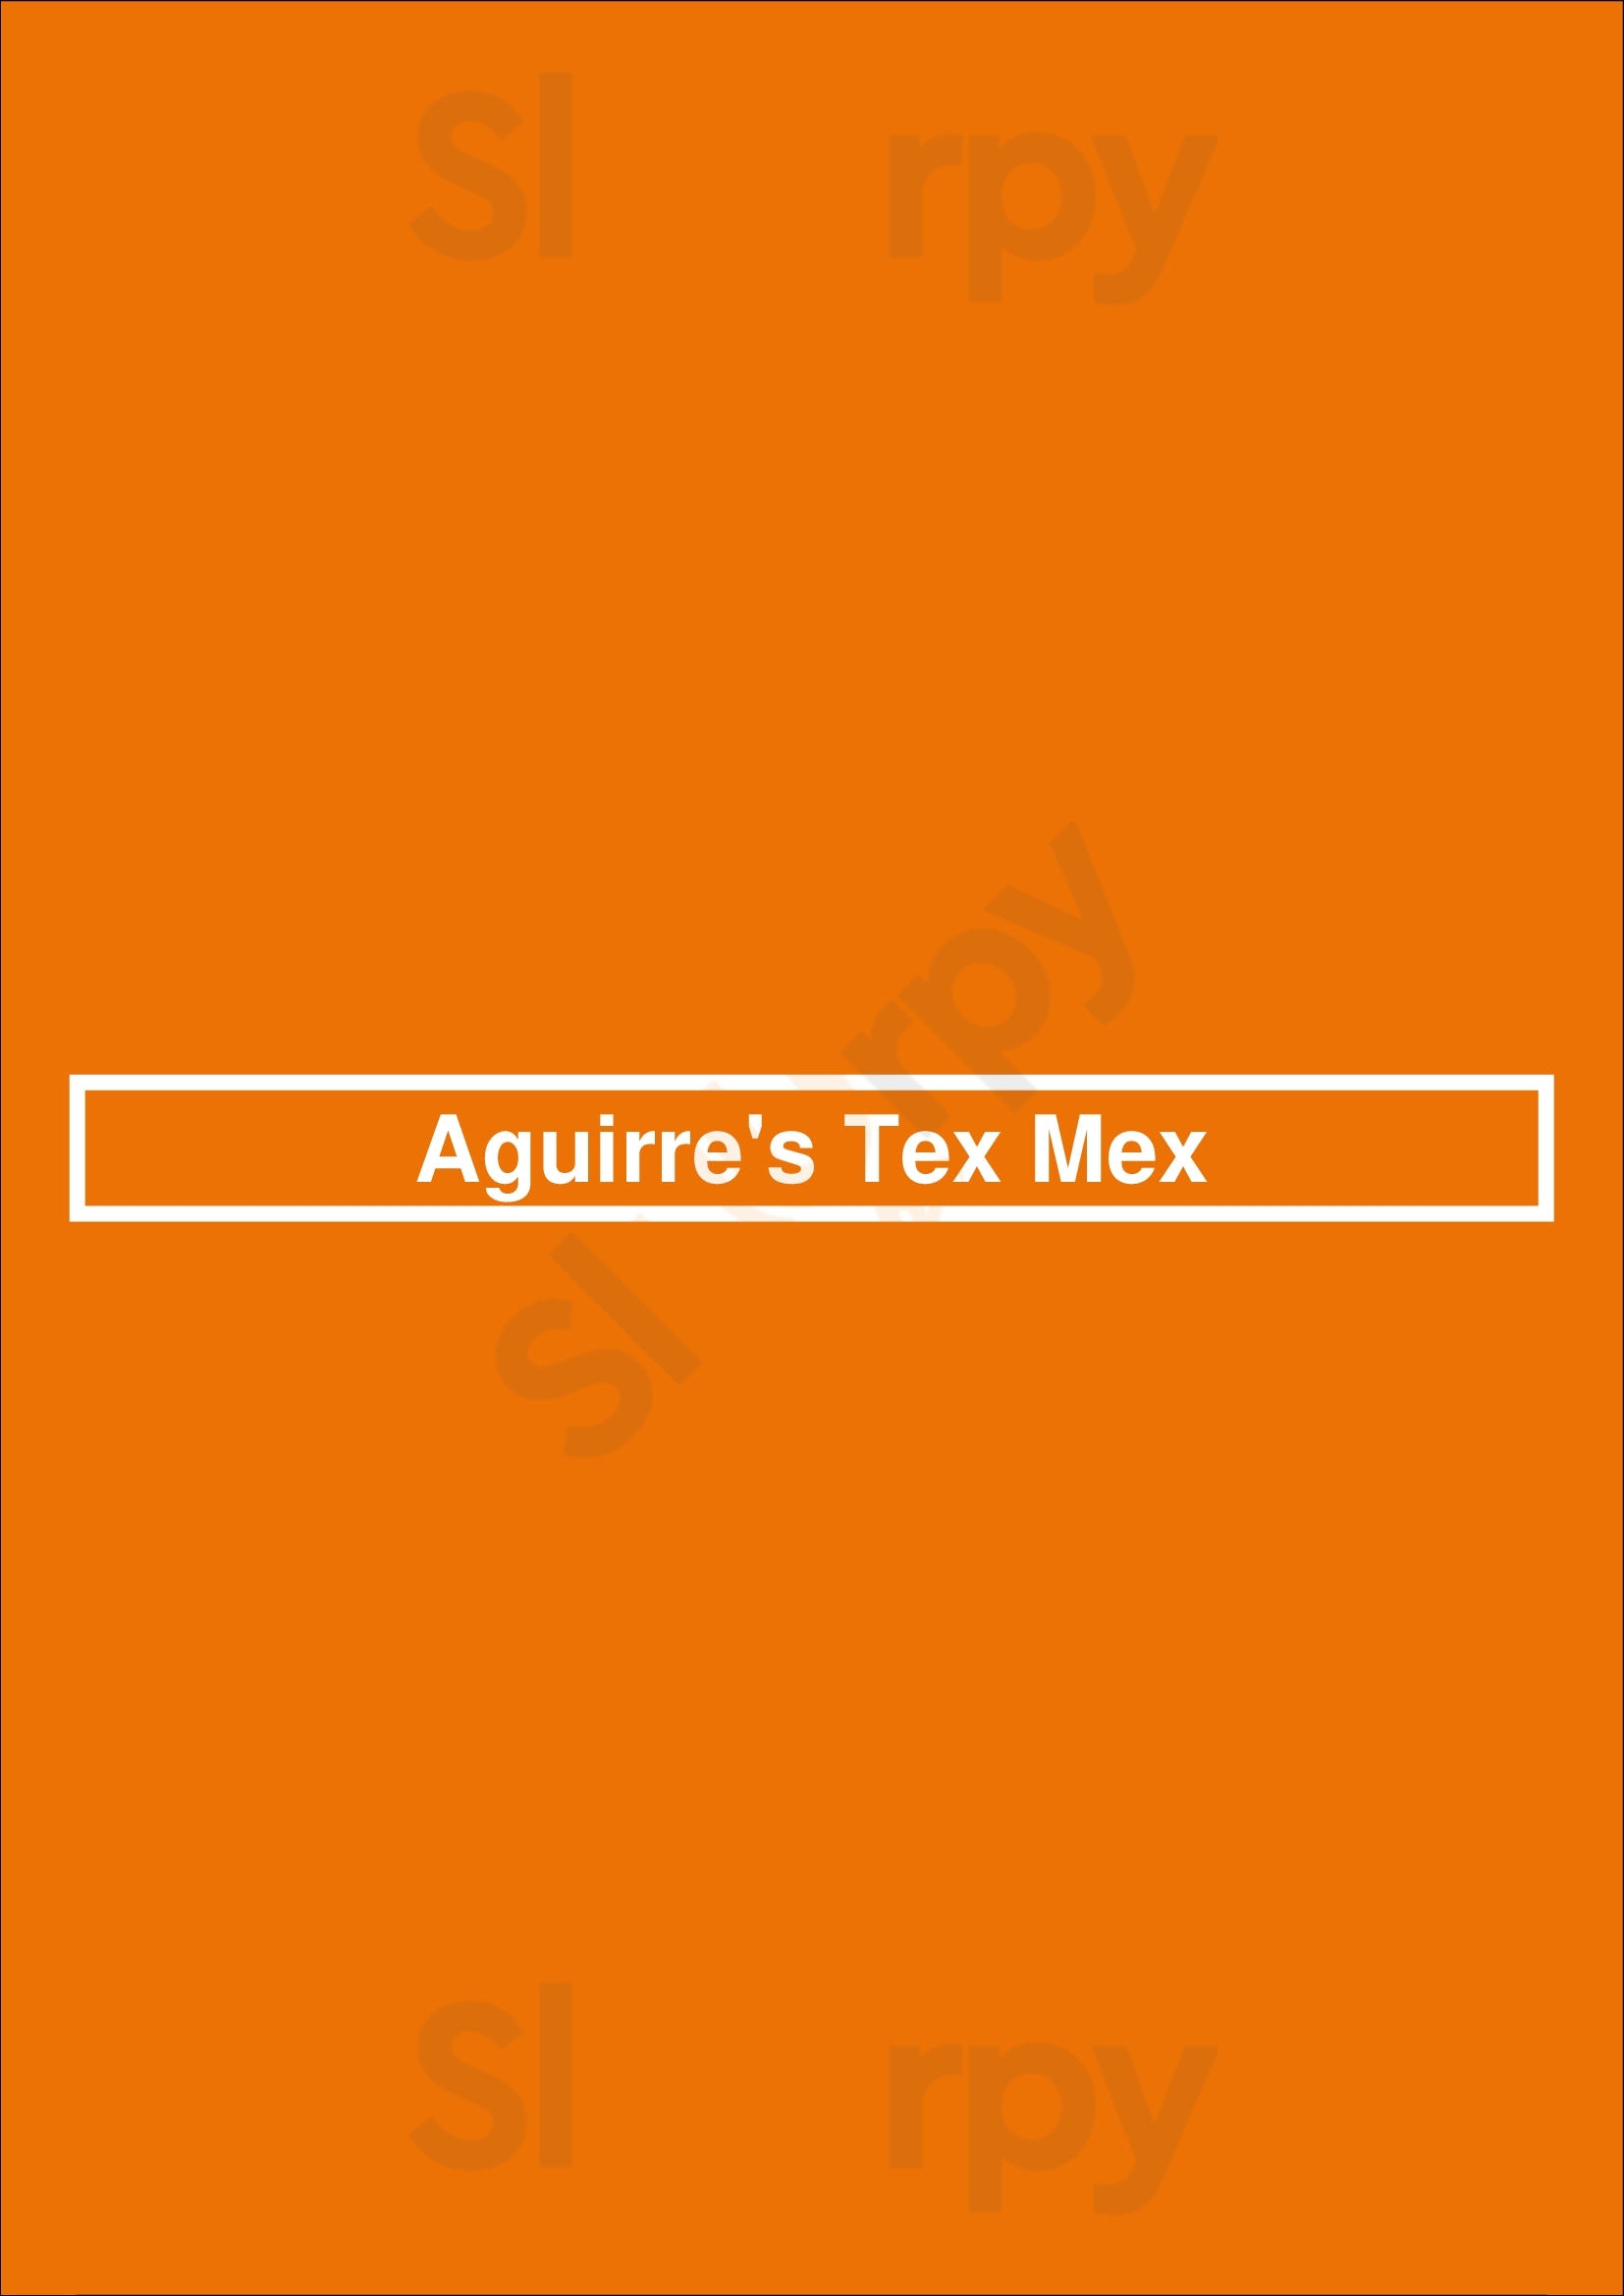 Aguirre's Tex Mex Houston Menu - 1